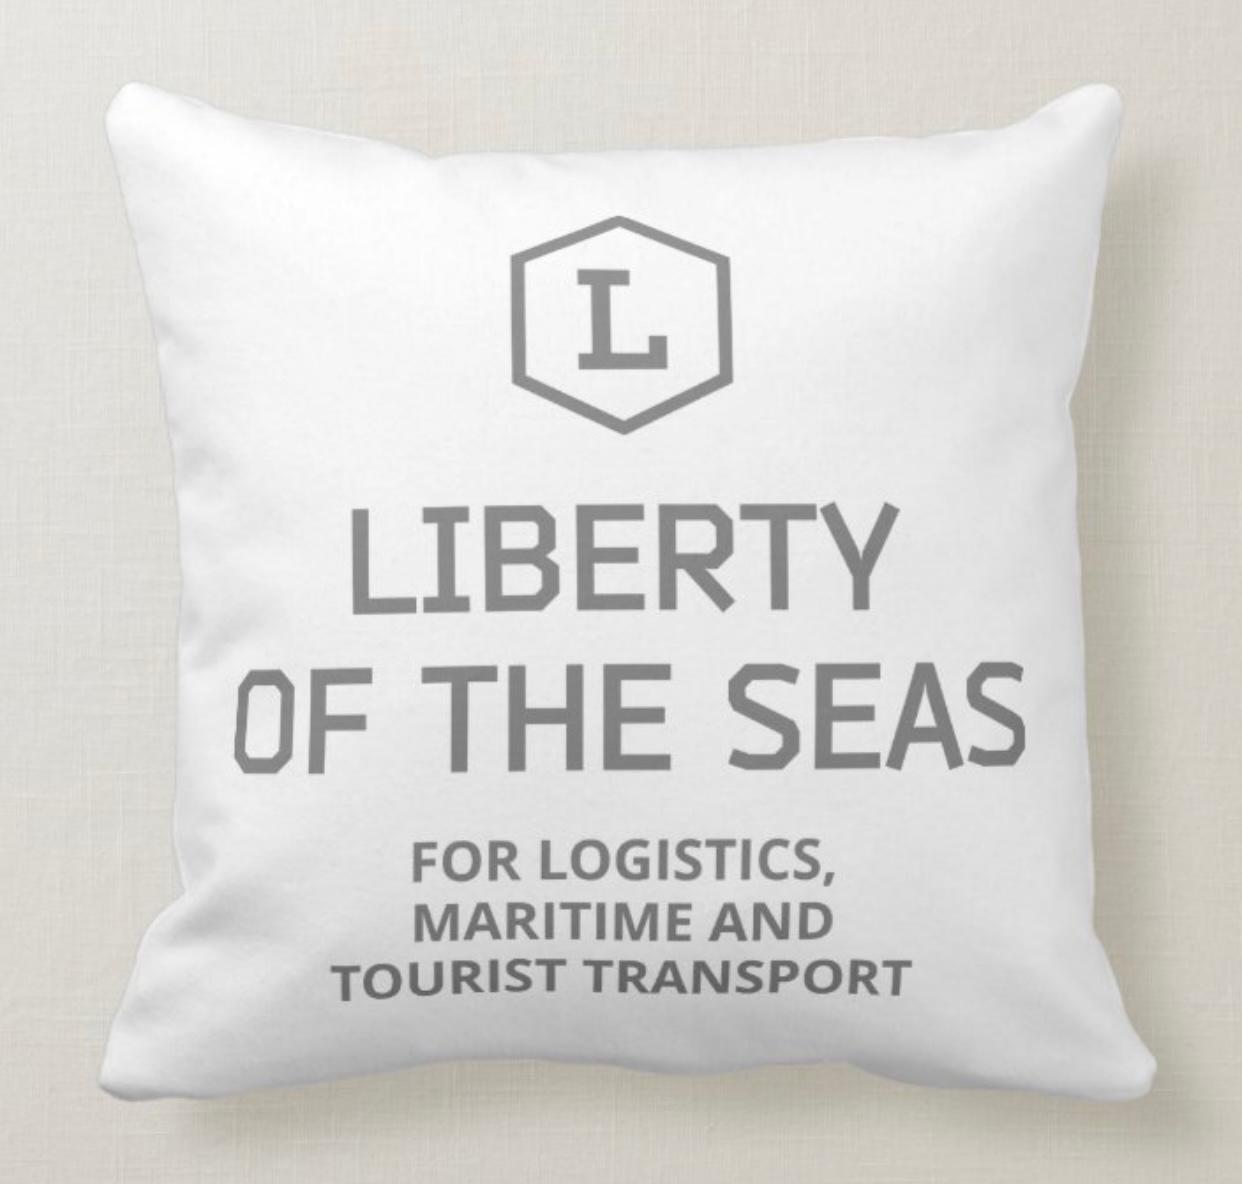 Liberty of the seas